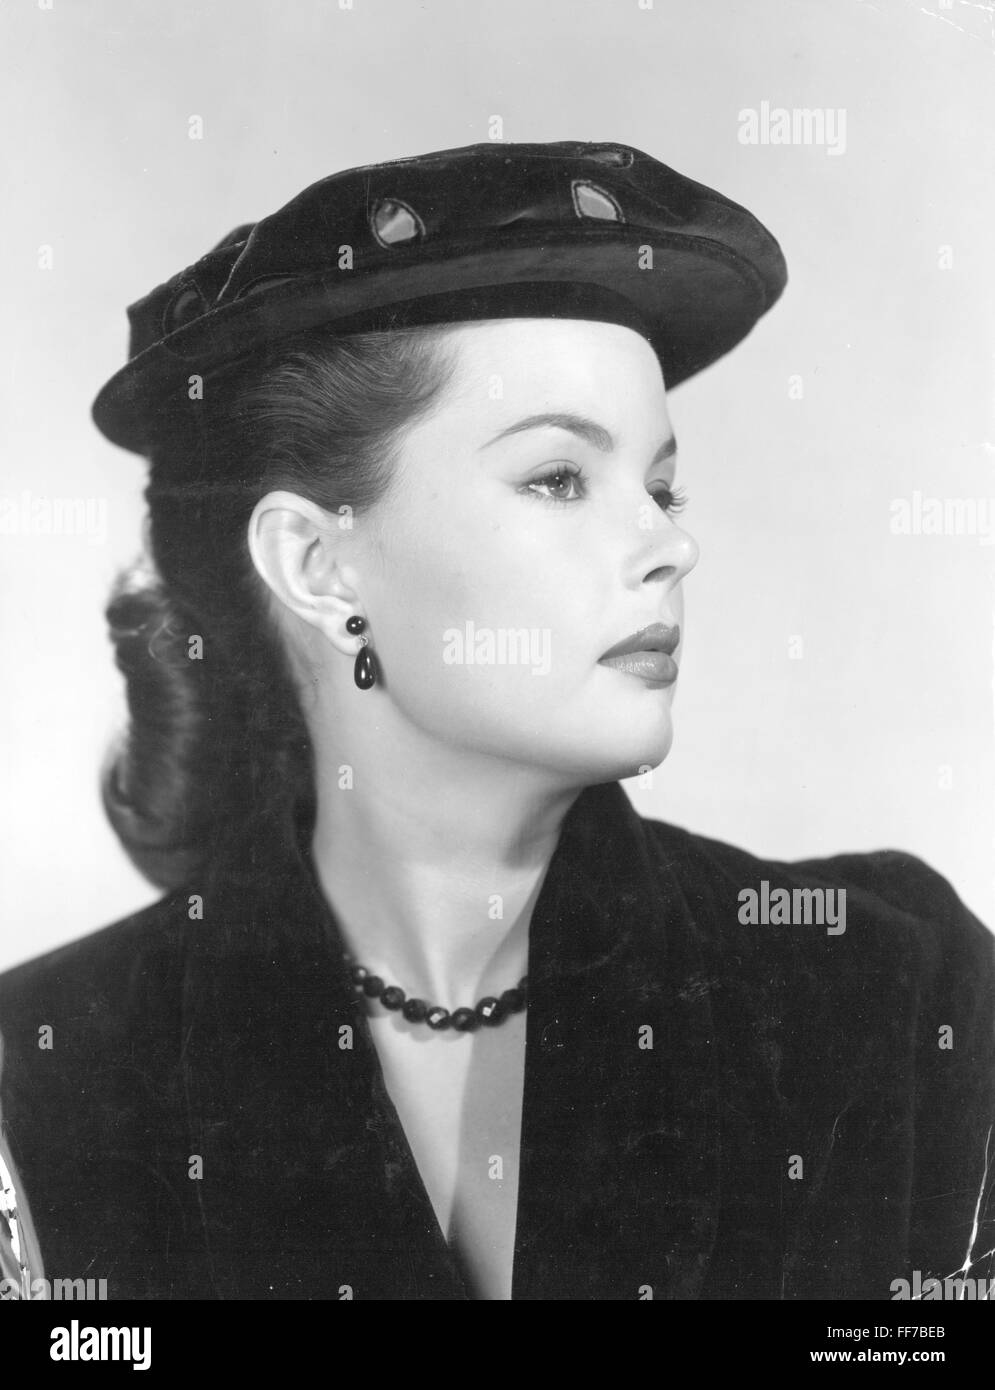 Mode, 50er Jahre, Hut, junge Frau mit Hut, Modell 'Florentine' von Carter,  1950, Additional-Rights-Clearences-not available Stockfotografie - Alamy